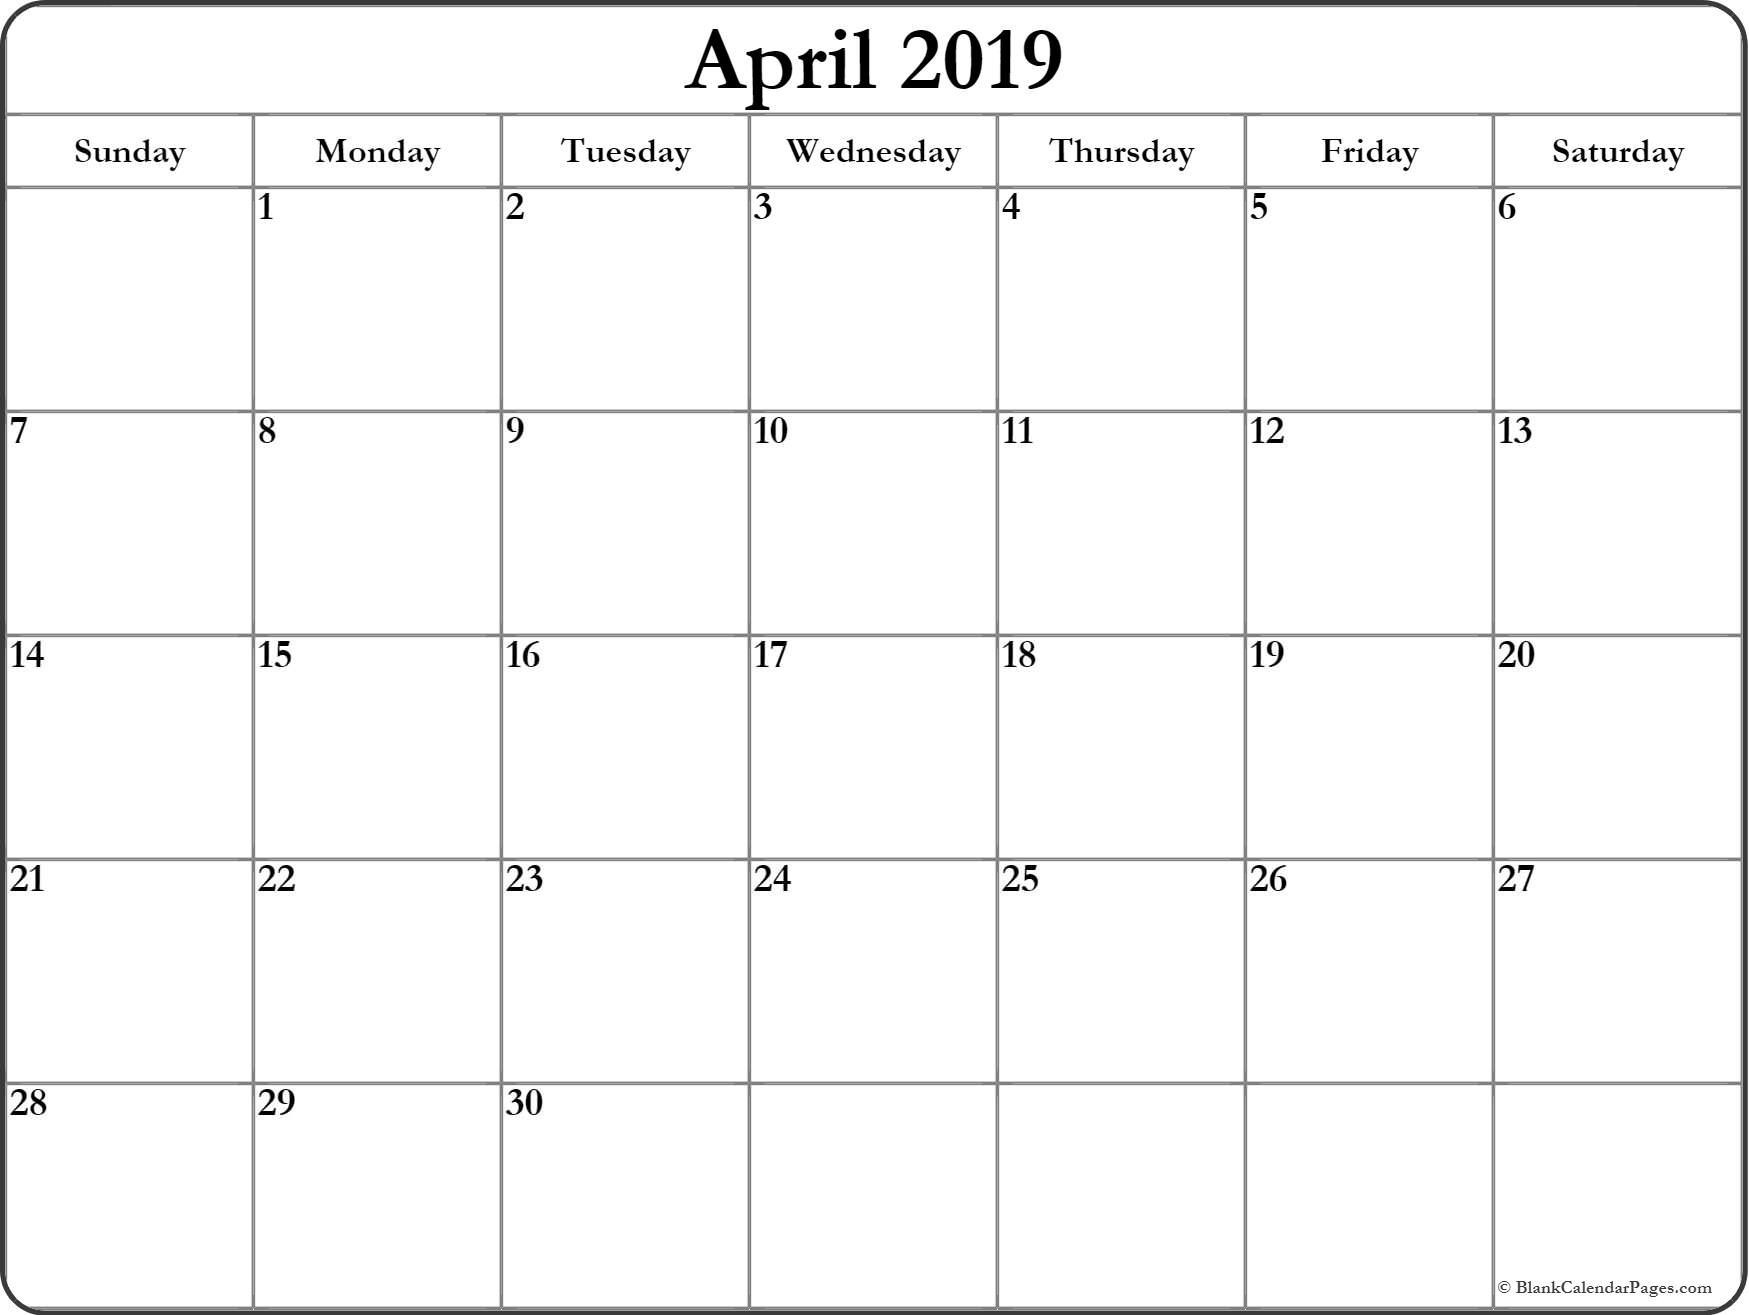 Blank Calendar April 2019 April 2019 Blank Calendar #april-Blank Calender 31 Days